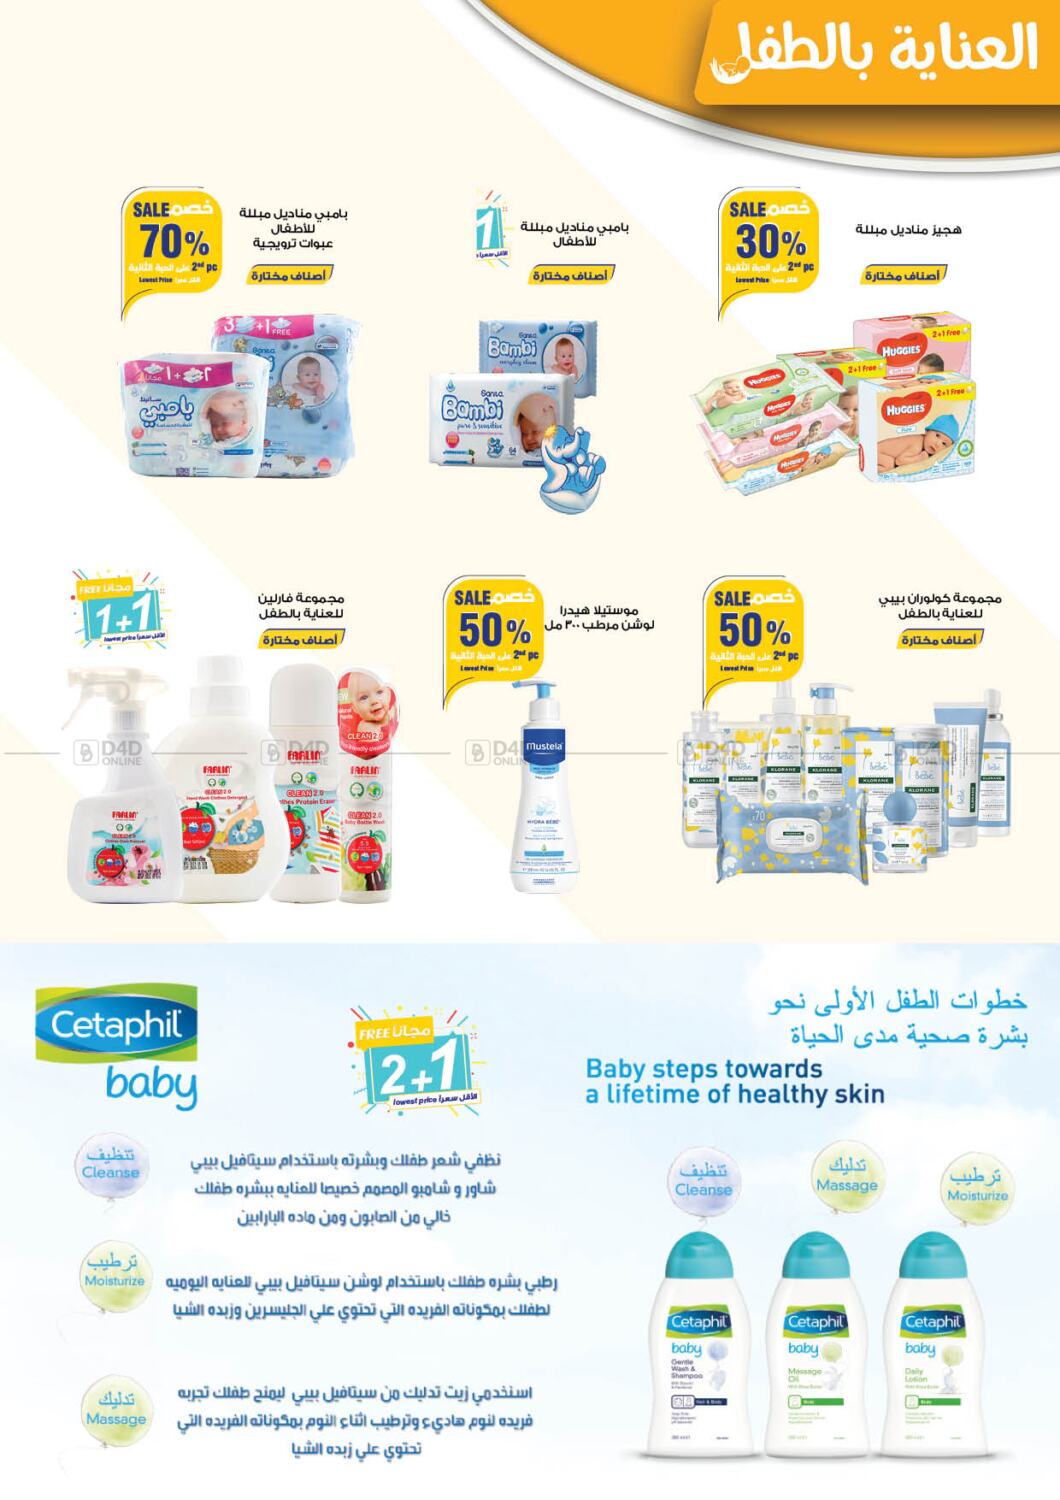 Al-Dawaa Pharmacy Special Offer in Saudi Arabia Offers - Saudi Arabia ...